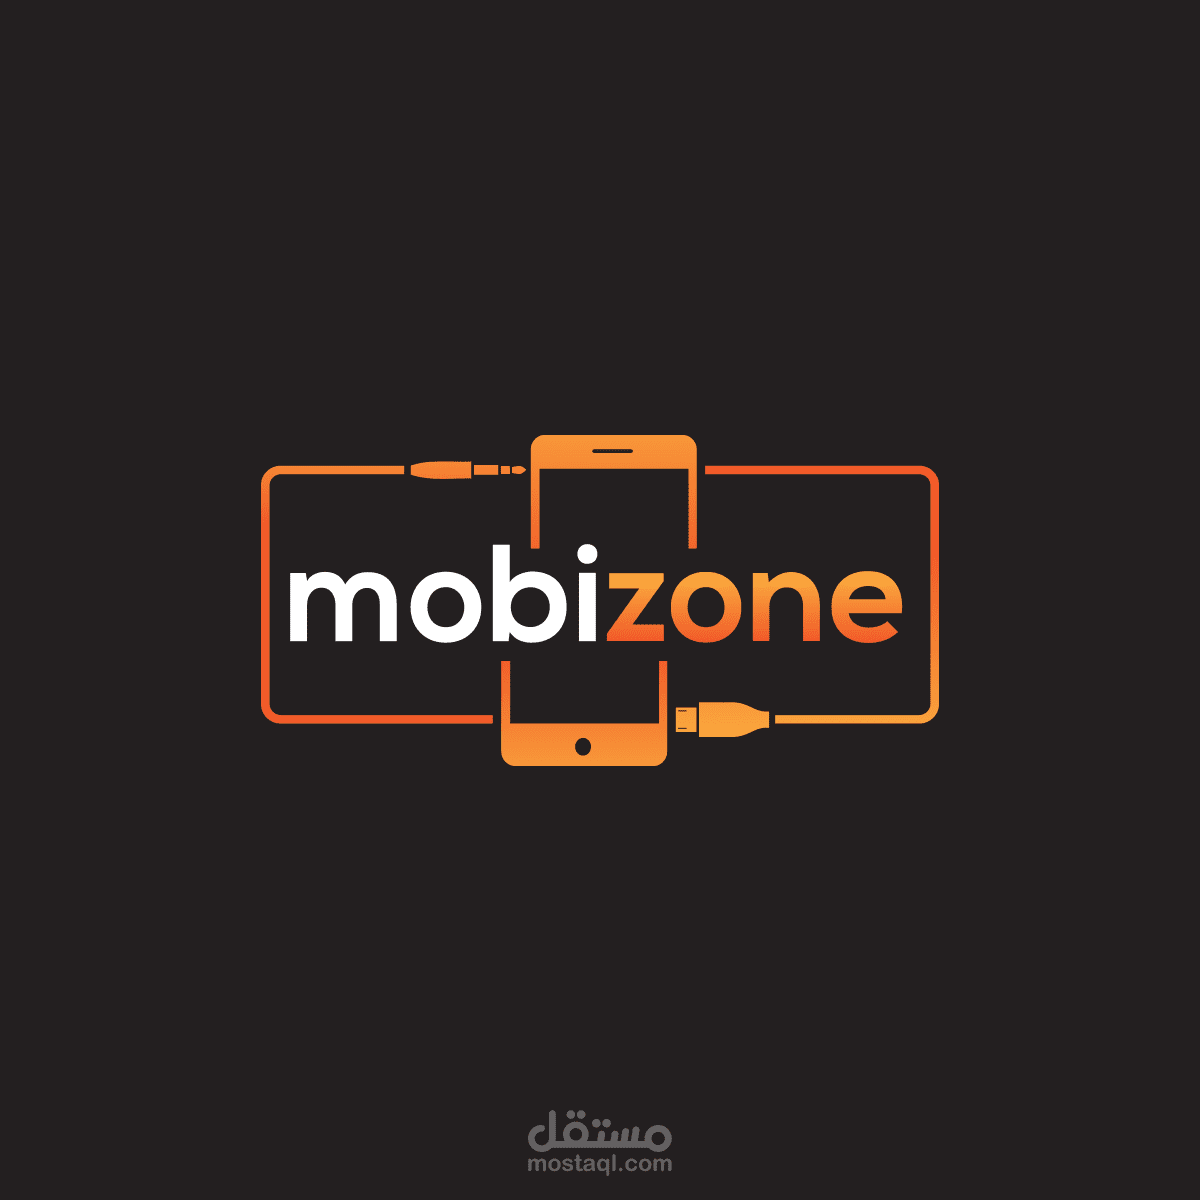 Mobile phone shop logo | مستقل